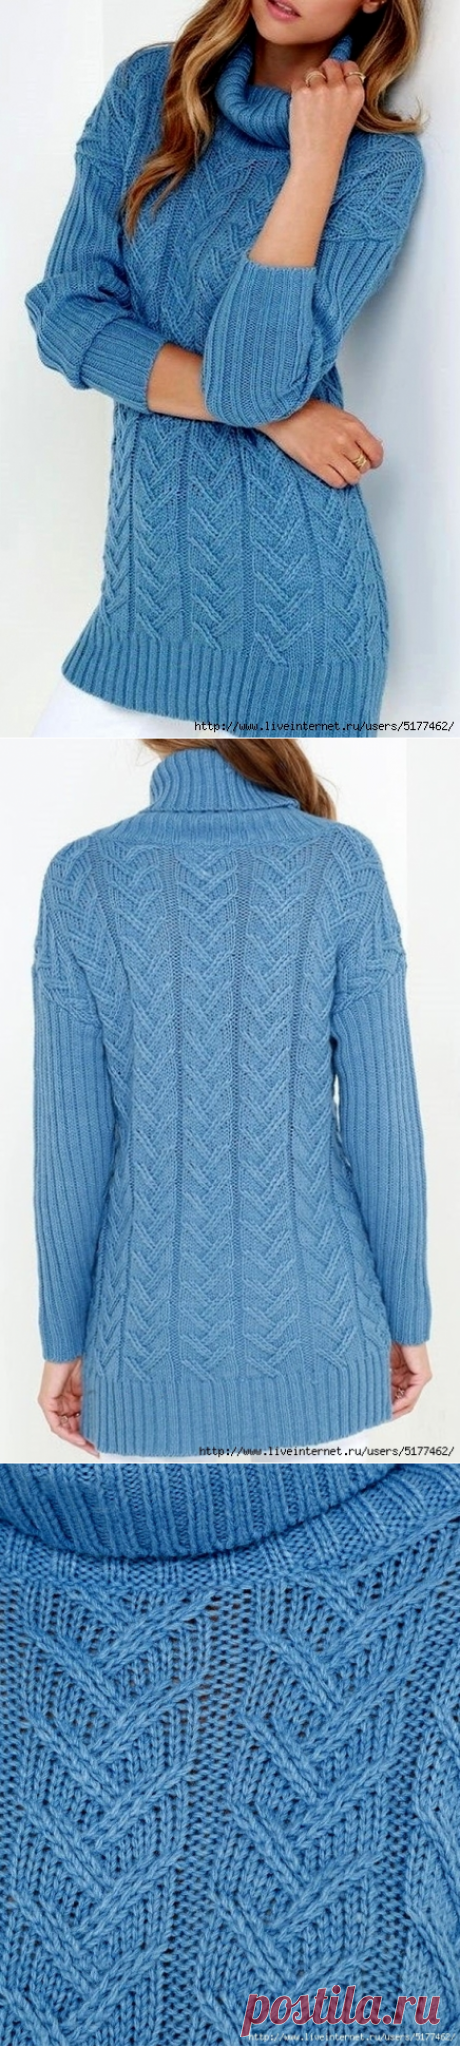 Голубой свитер спицами